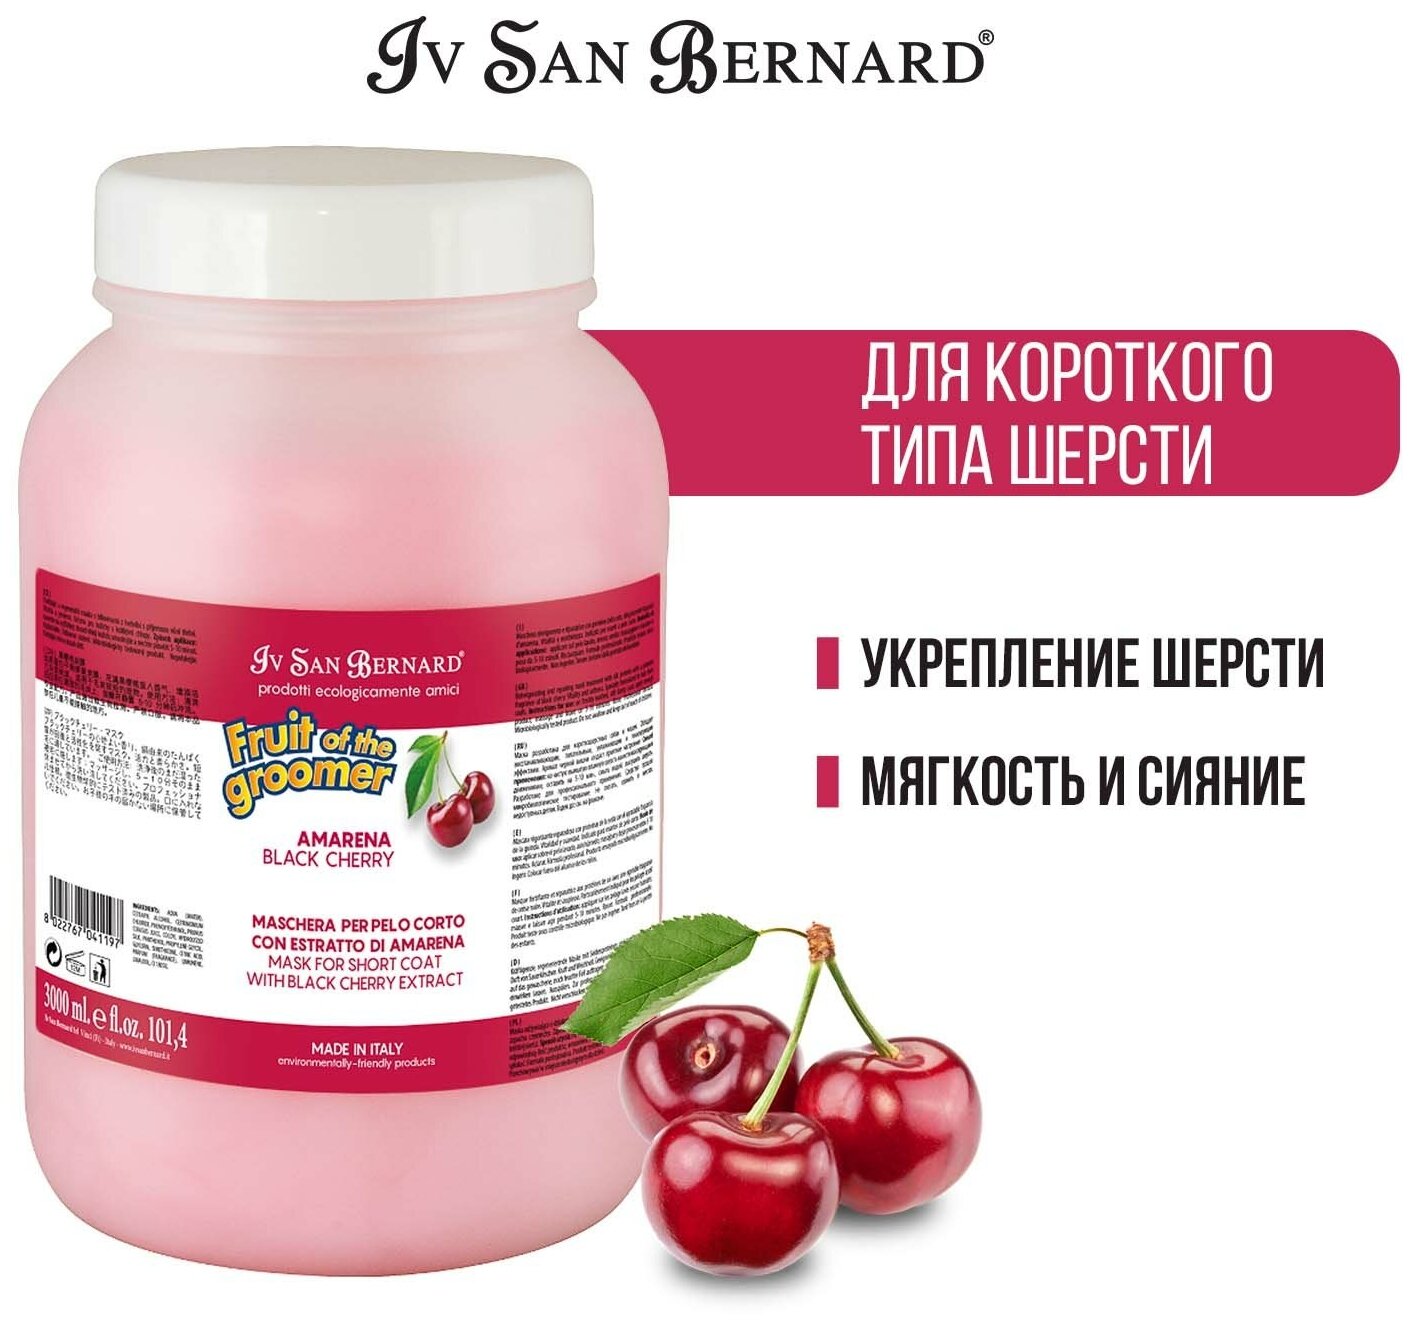 Iv San Bernard Fruit of the Groomer Black Cherry Восстанавливающая маска для короткой шерсти с протеинами шелка 3 л